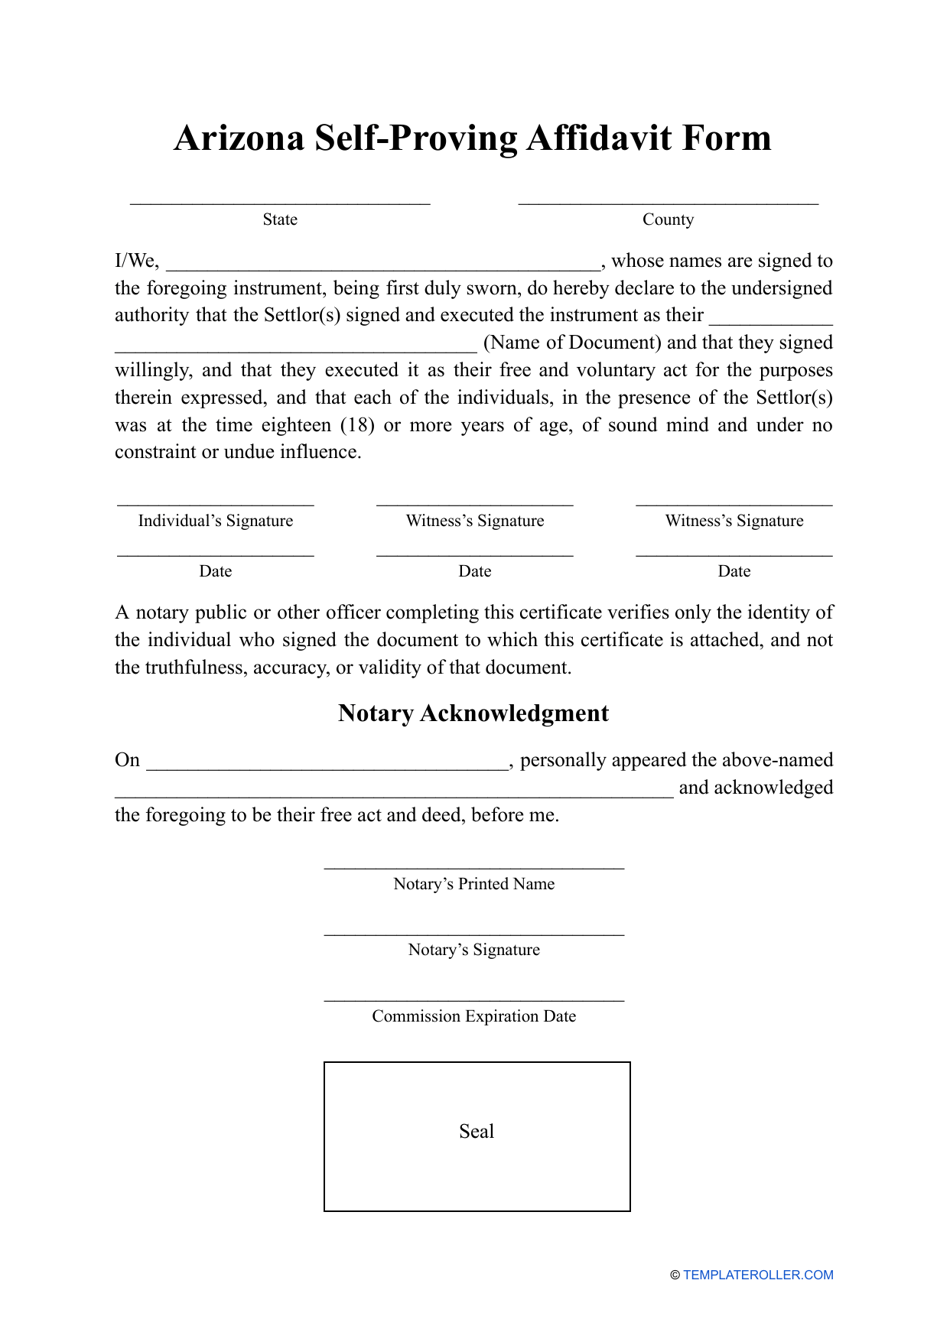 Self-proving Affidavit Form - Arizona, Page 1